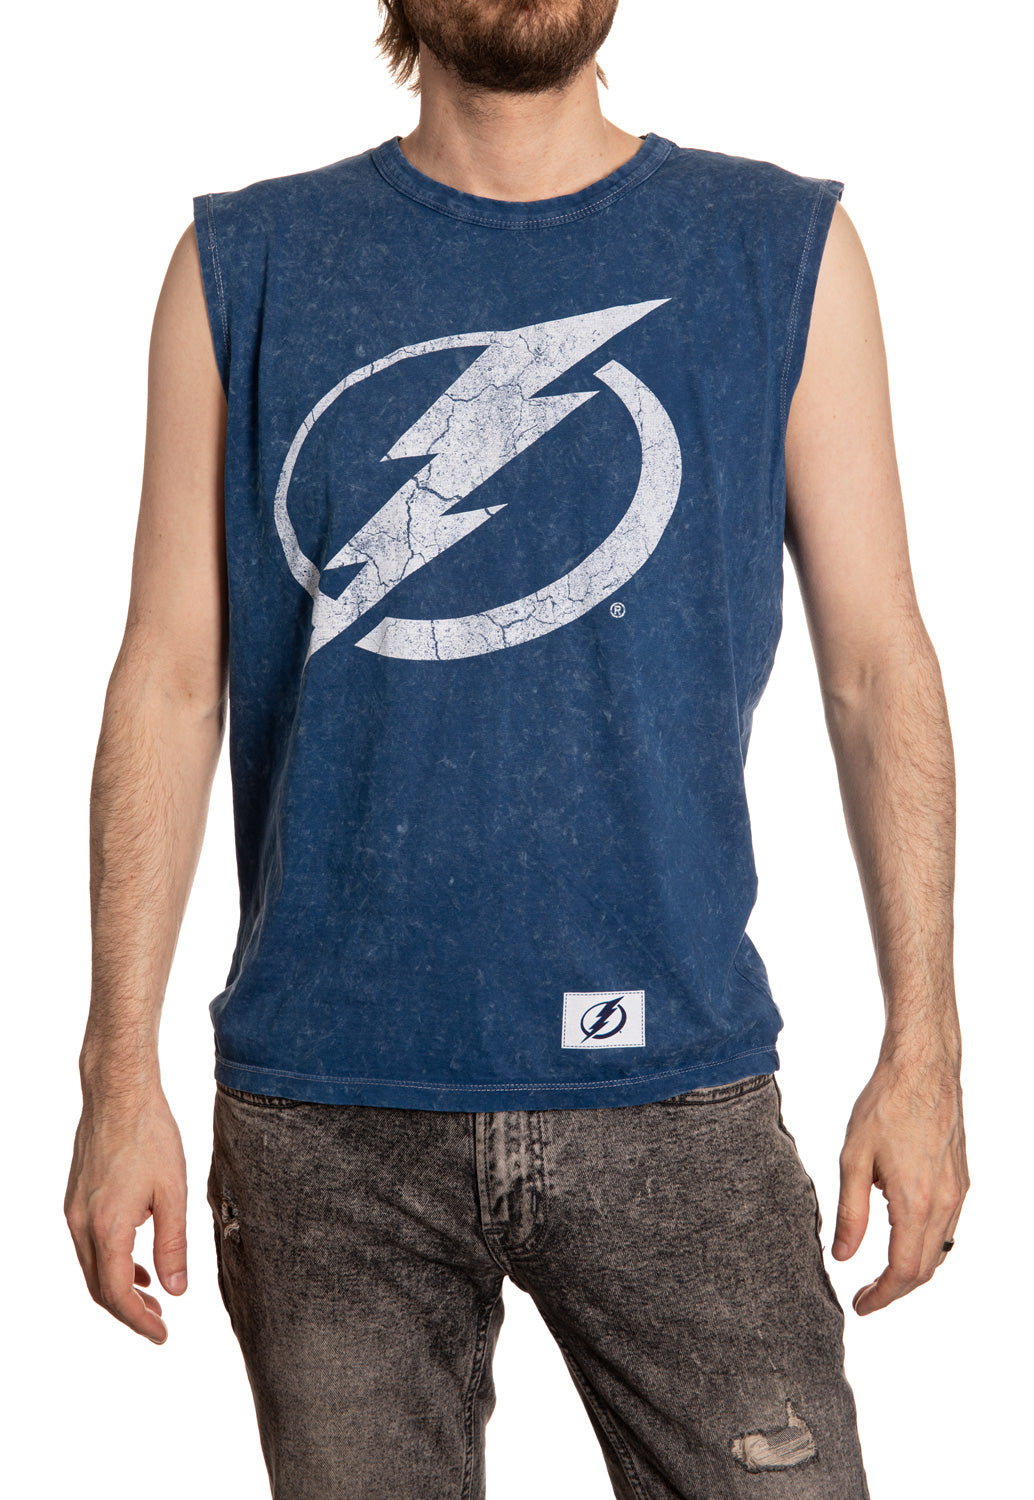 Tampa Bay Lightning Acid Washed Sleeveless Shirt Front View